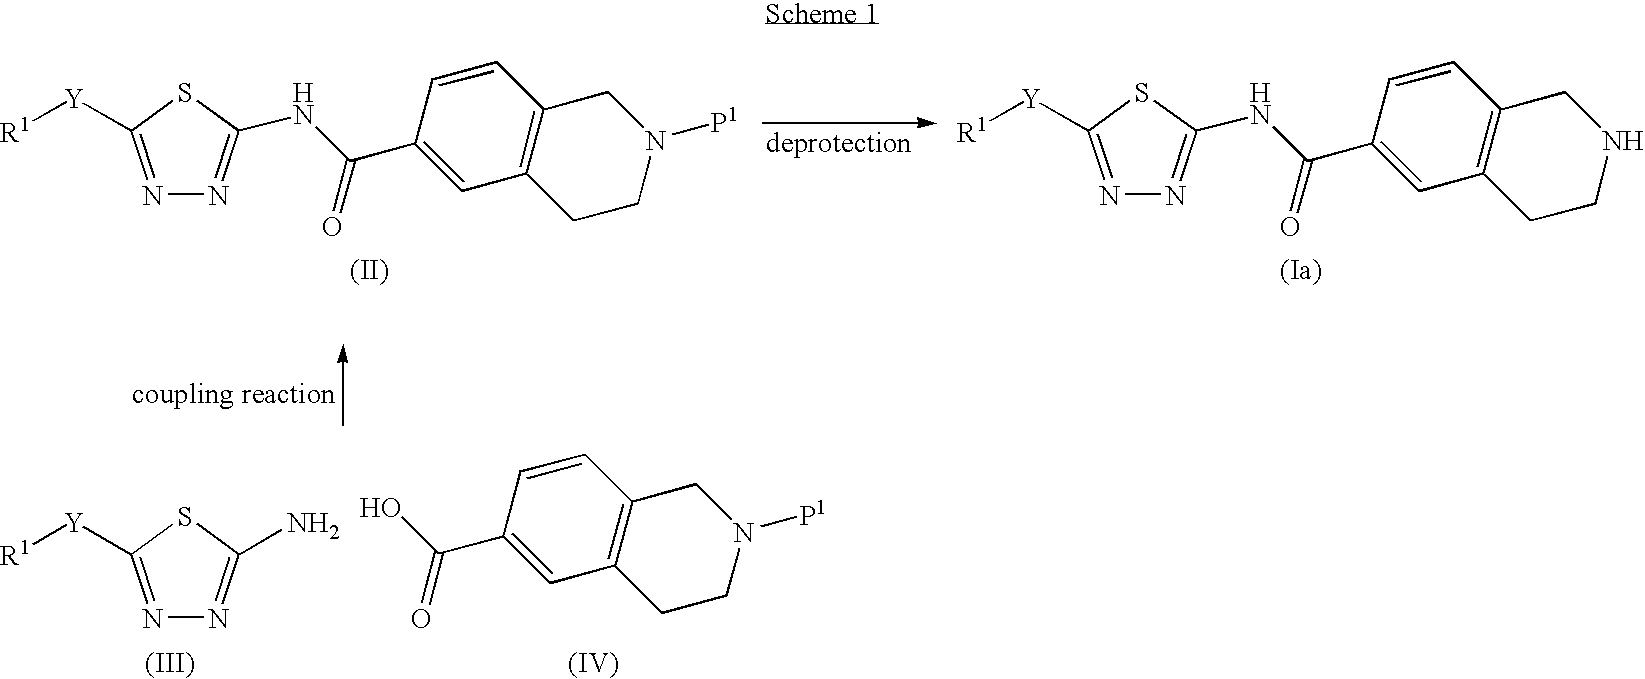 Thiadiazole derivatives, inhibitors of stearoyl-coa desaturase